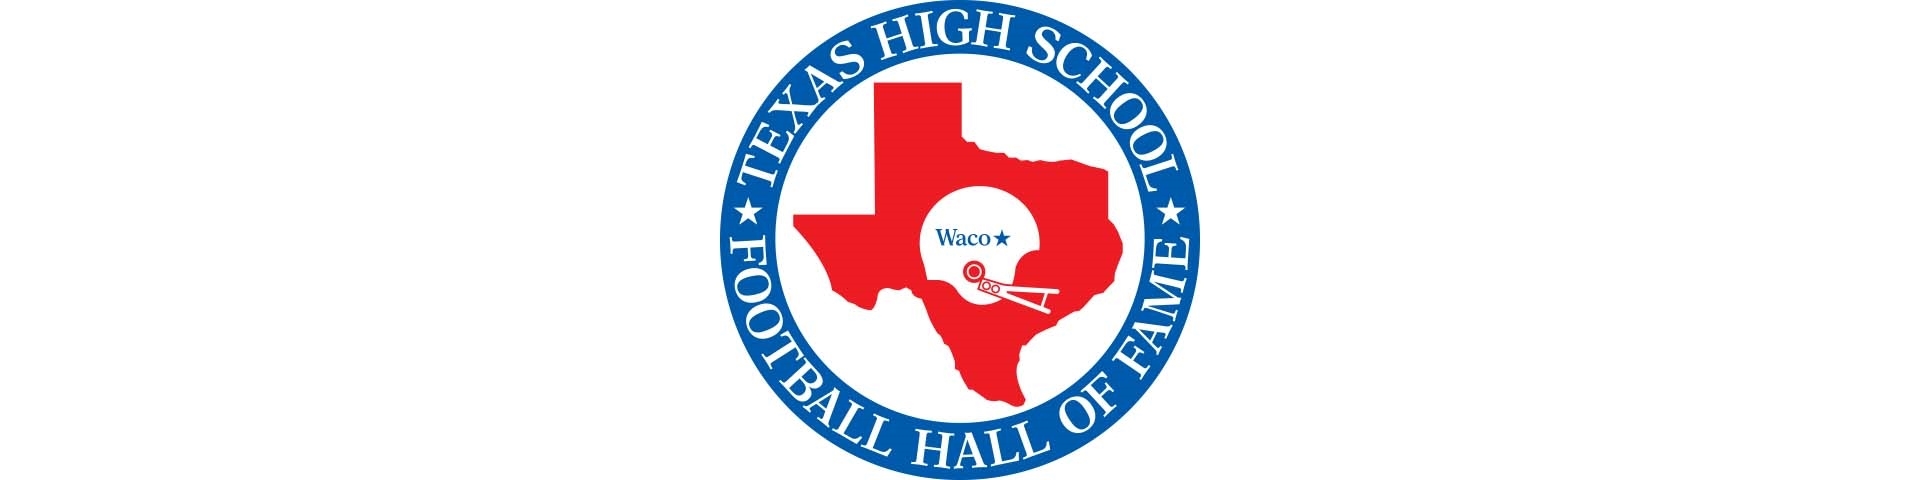 Texas High School Football Hall of Fame: Highland Park set Stafford on  successful path